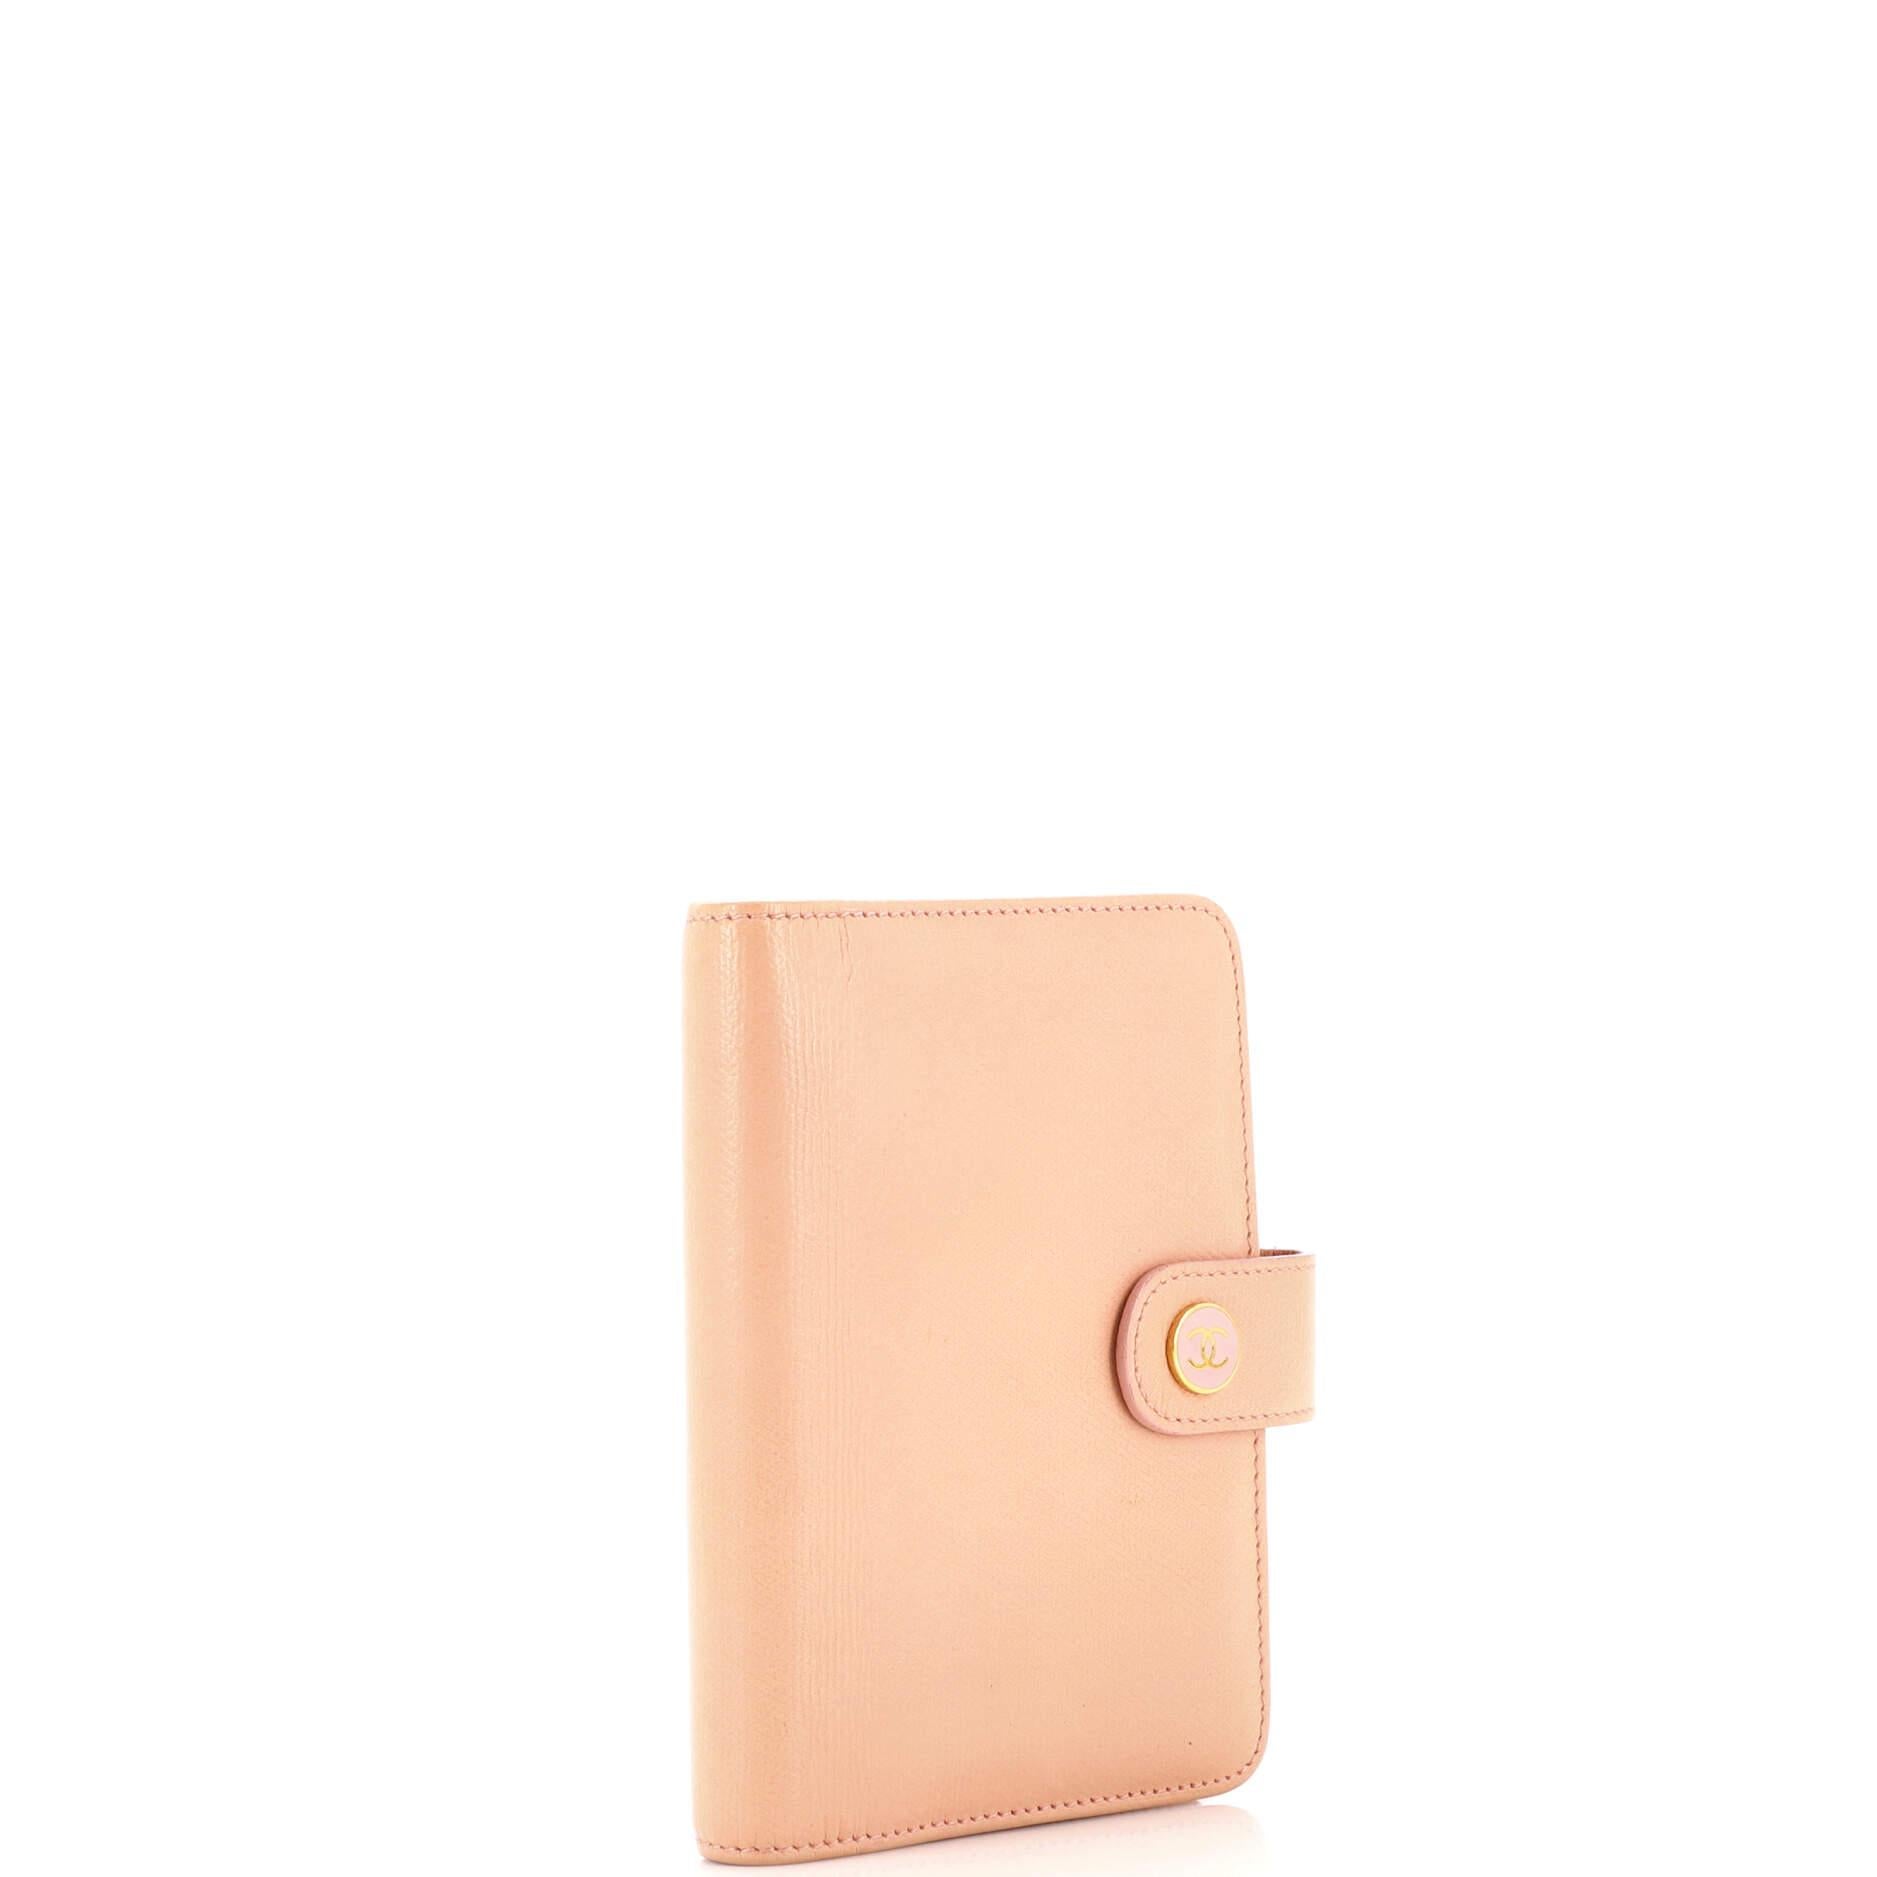 Buy Mens RFID Blocking Wallet,Genuine Leather Vintage Biflod Wallets  Multifunctional Credit Card Holder Minimalist Purse with Zipper Pocket for  Men (Black) at